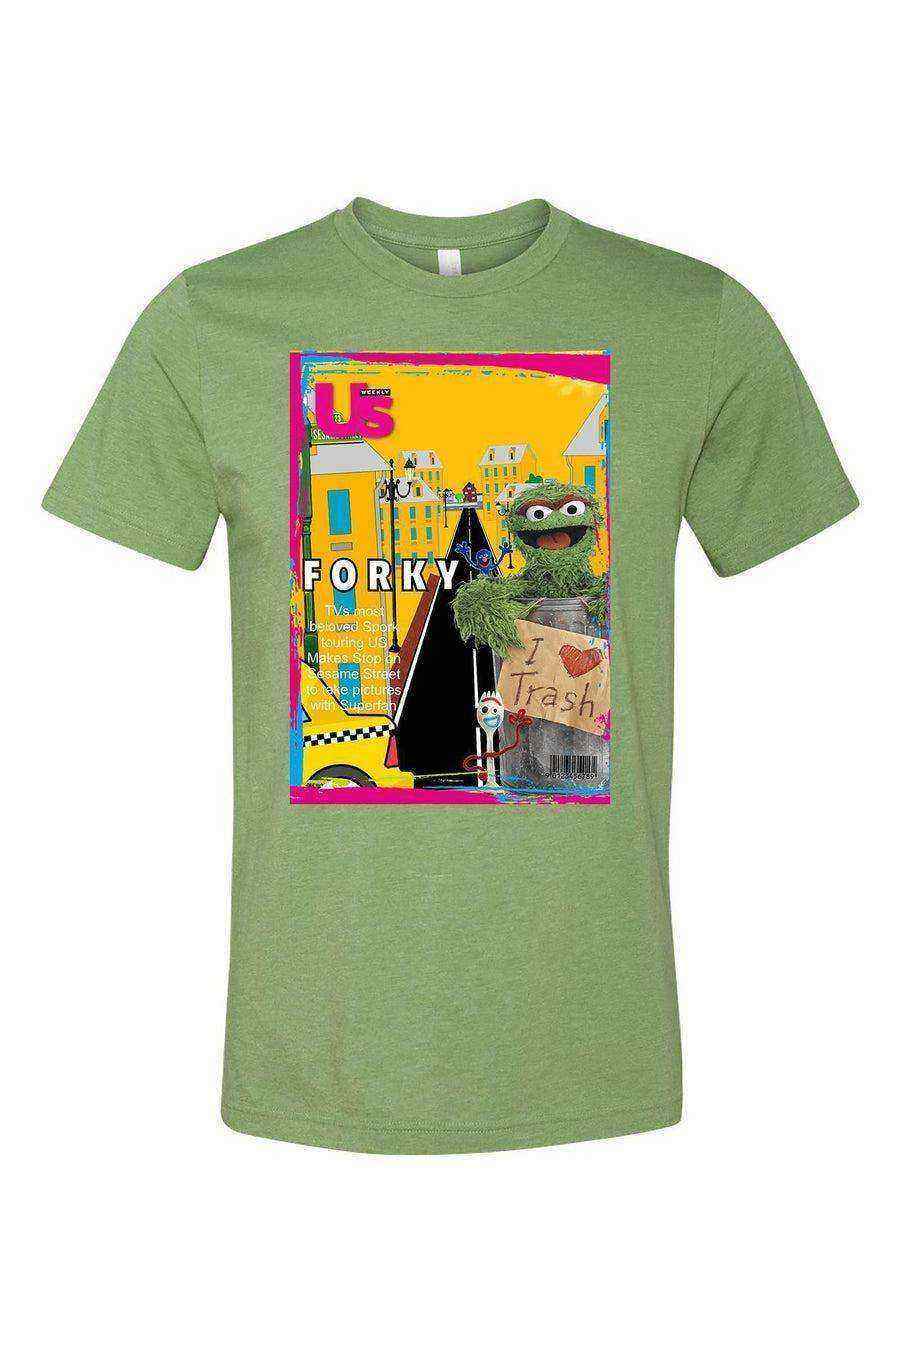 Youth | I Love Trash Shirt | Forky Shirt | Oscar The Grouch Shirt - Dylan's Tees